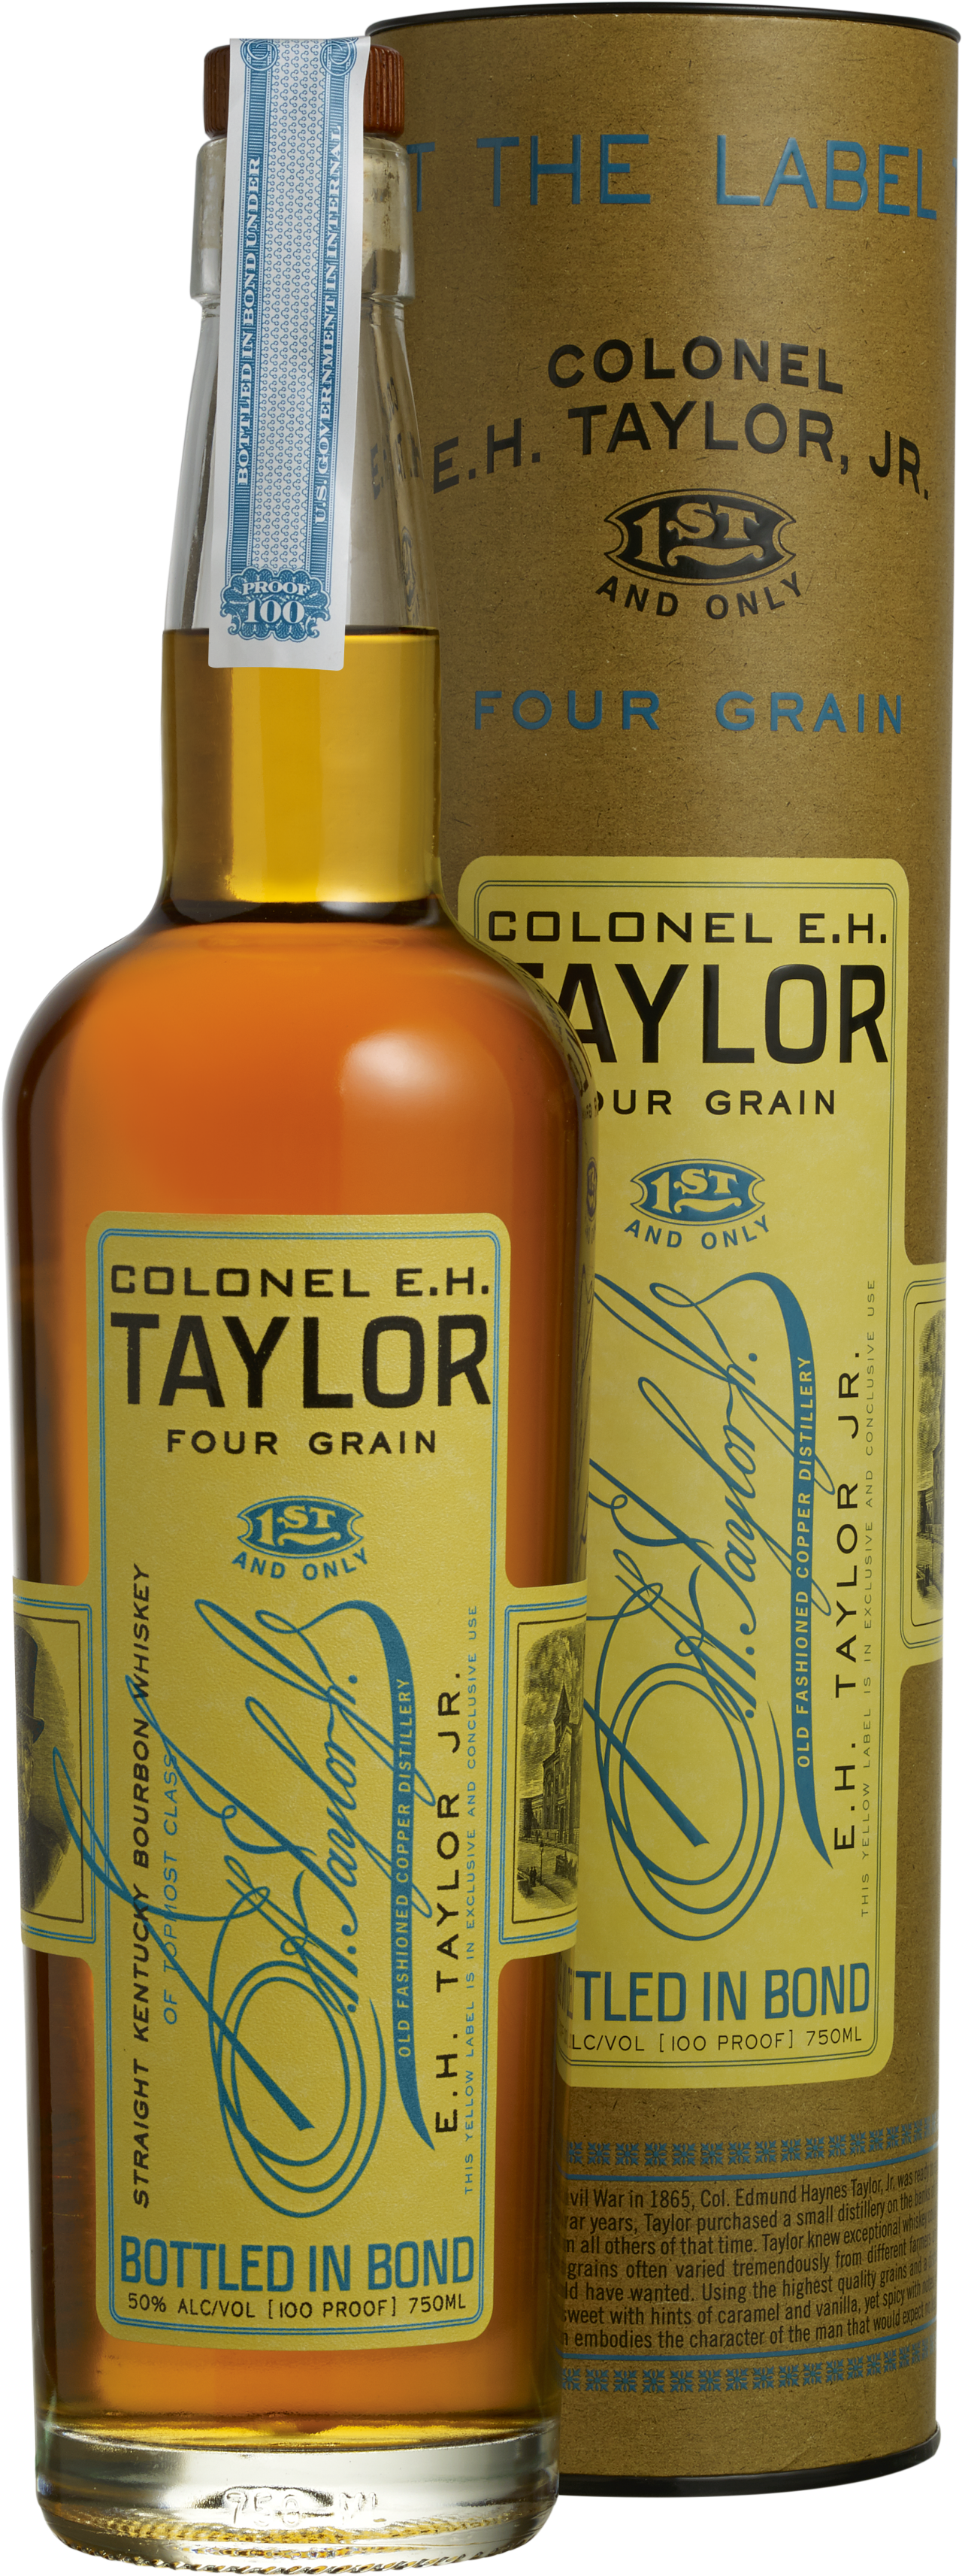 E.H. Taylor, Jr. Four Grain bottle bottle with canister